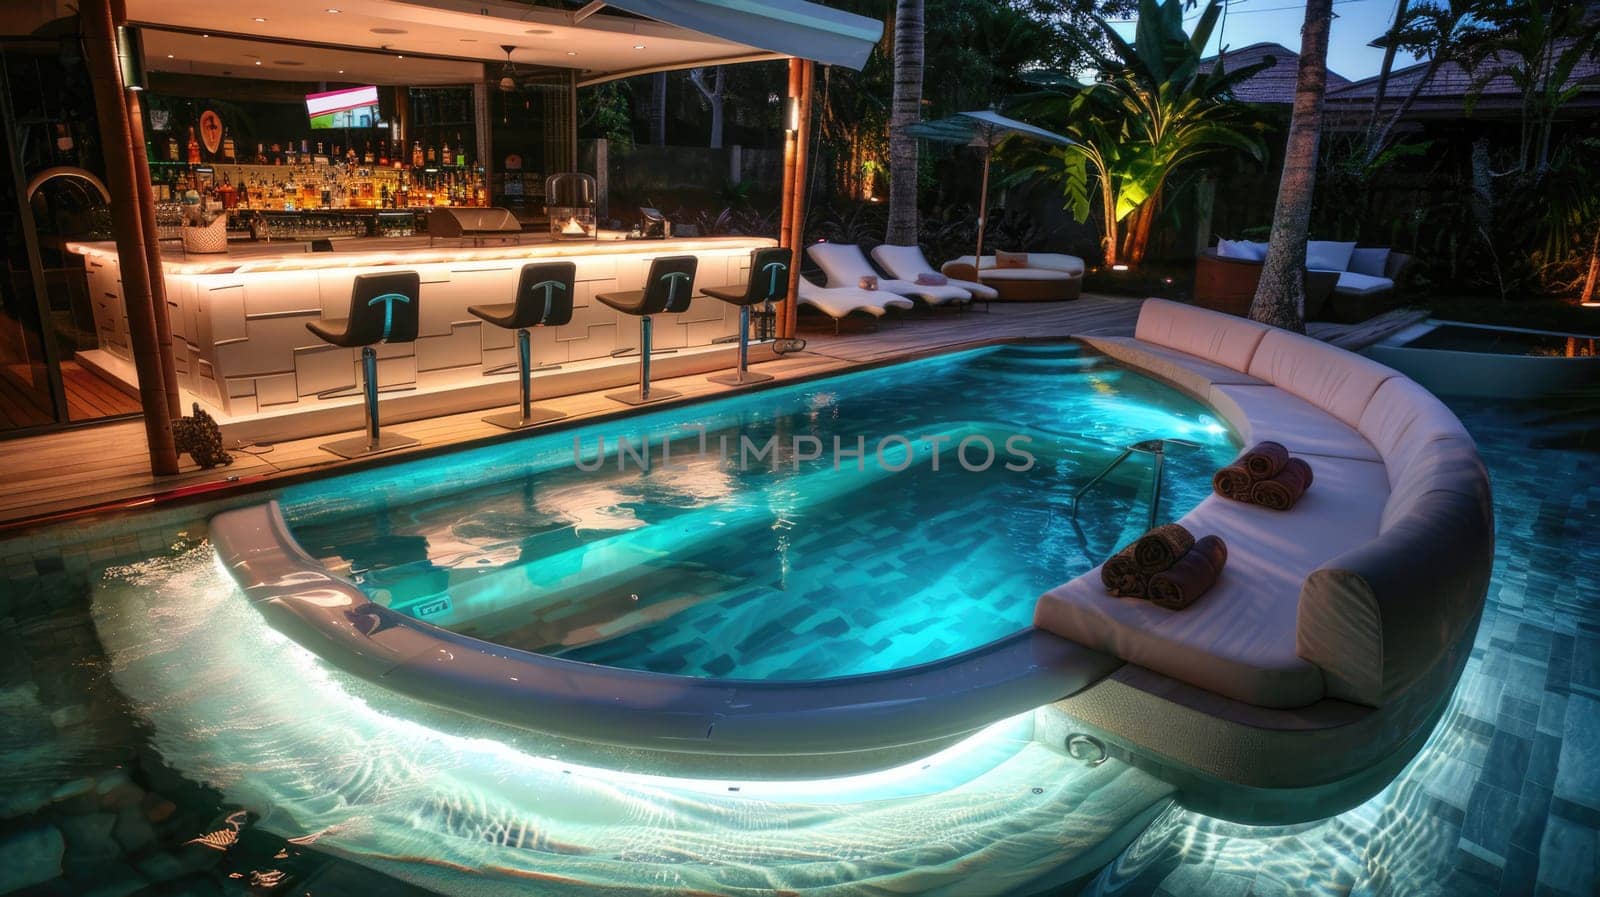 Stunning luxury backyard view of pool with bar AI